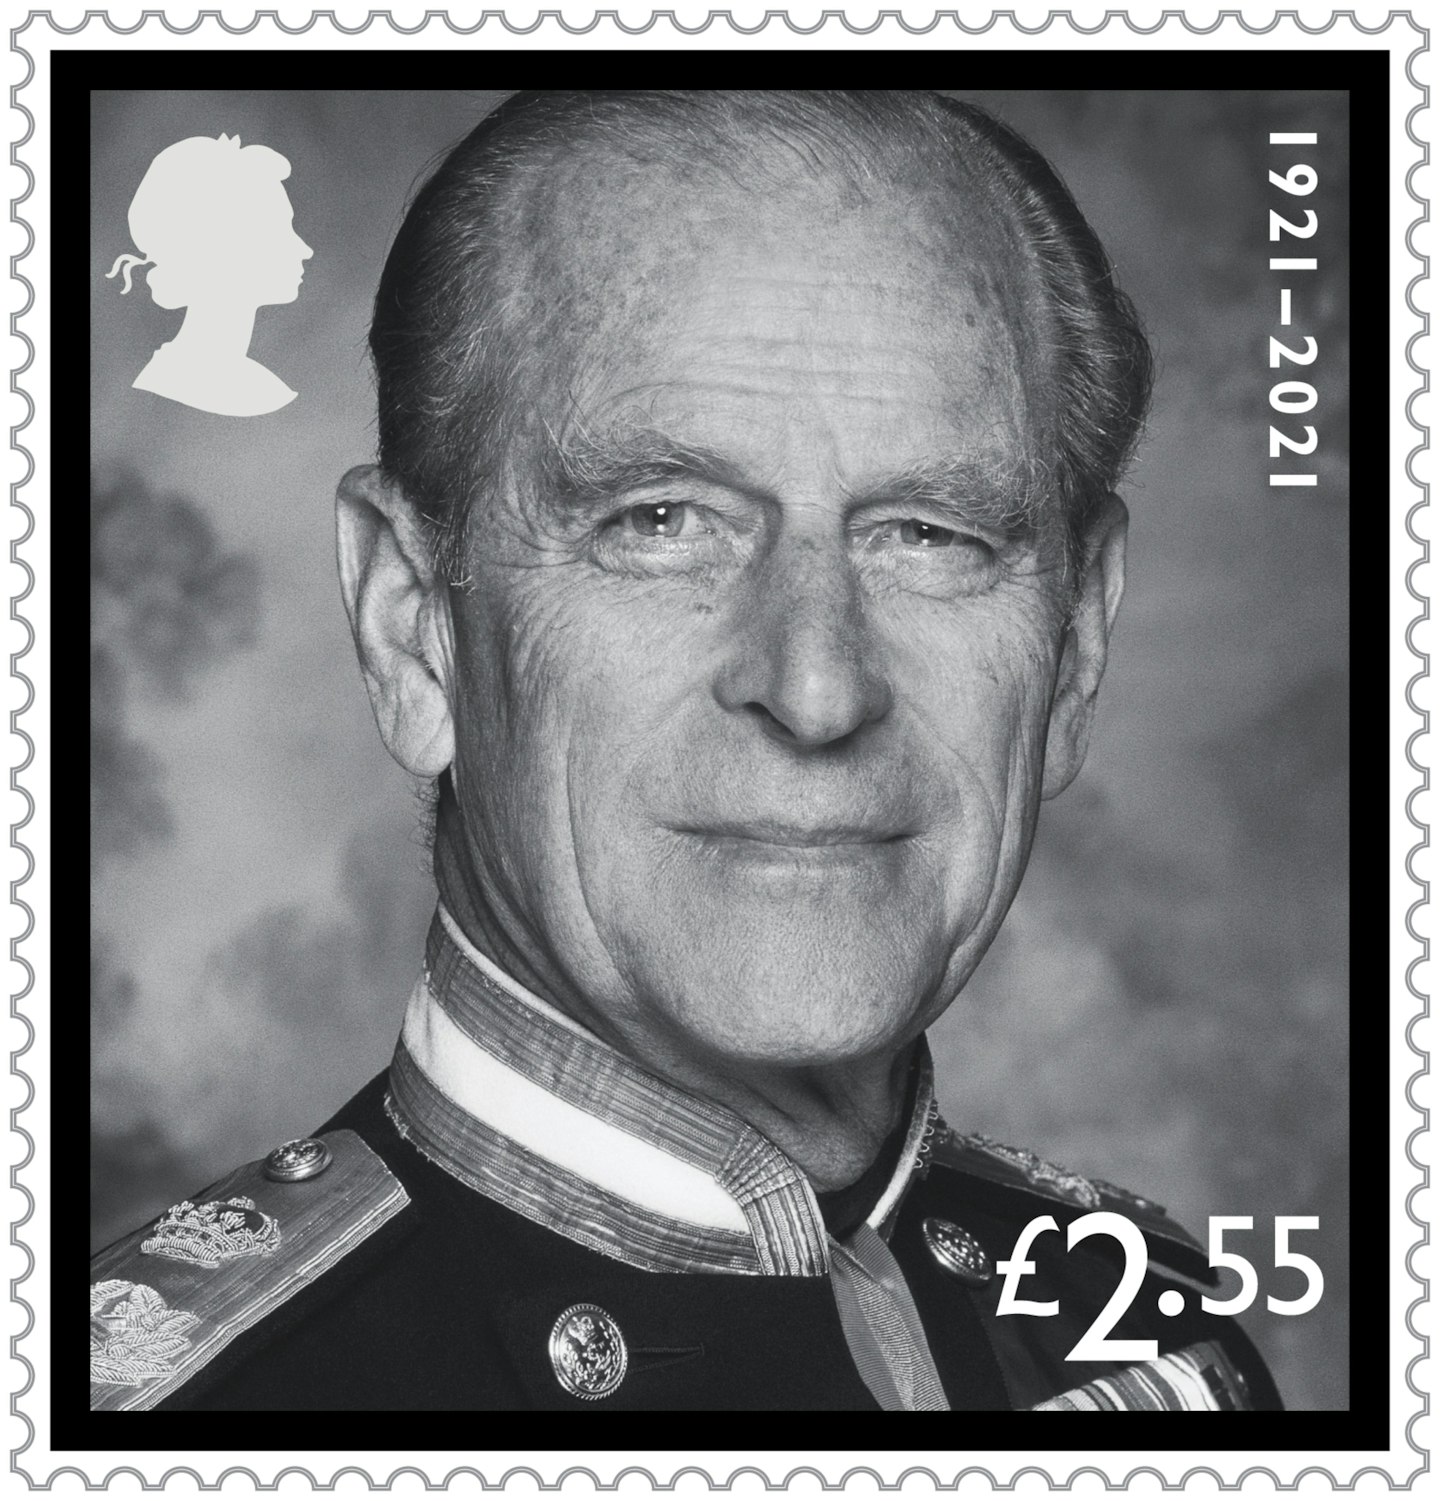 Prince Philip stamp 